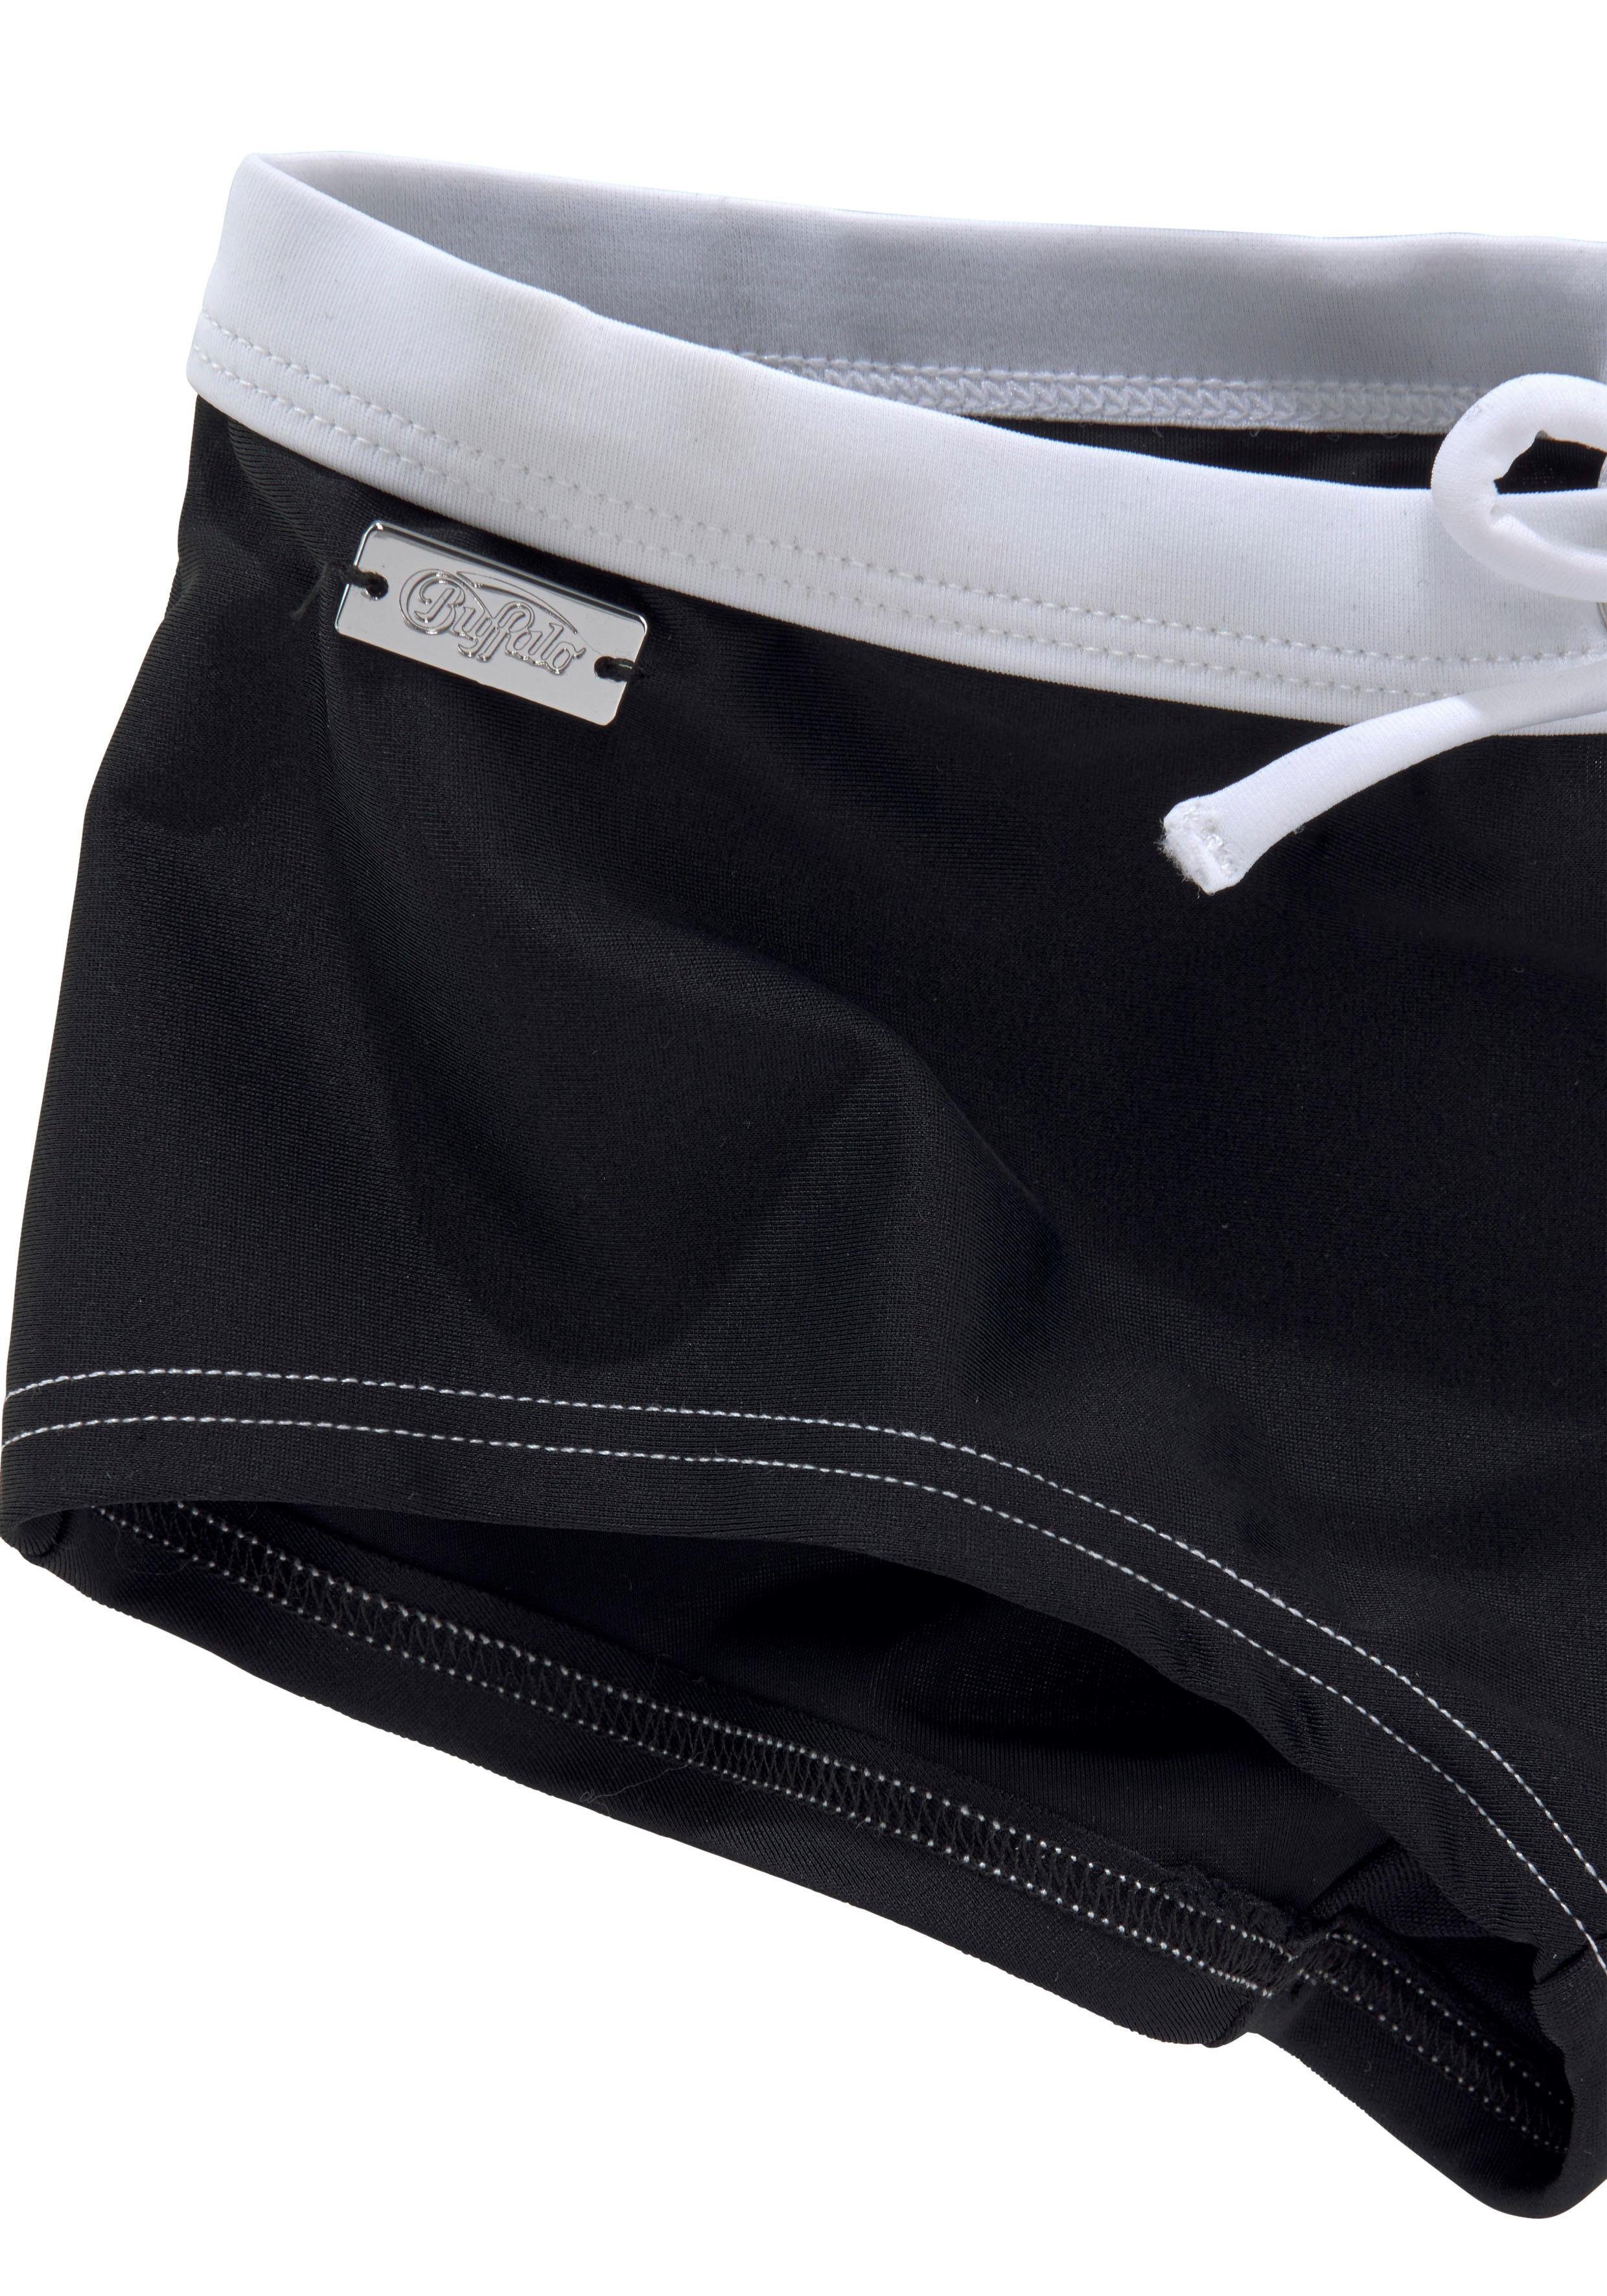 Buffalo trendiger mit Hotpants schwarz-weiß Triangel-Bikini